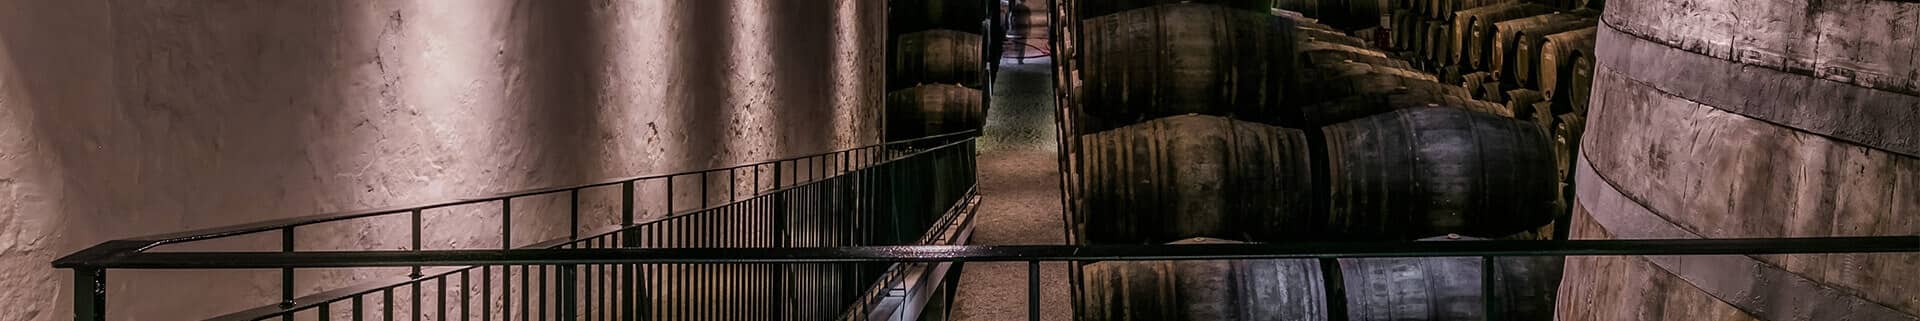 Port wine ageing in wood casks